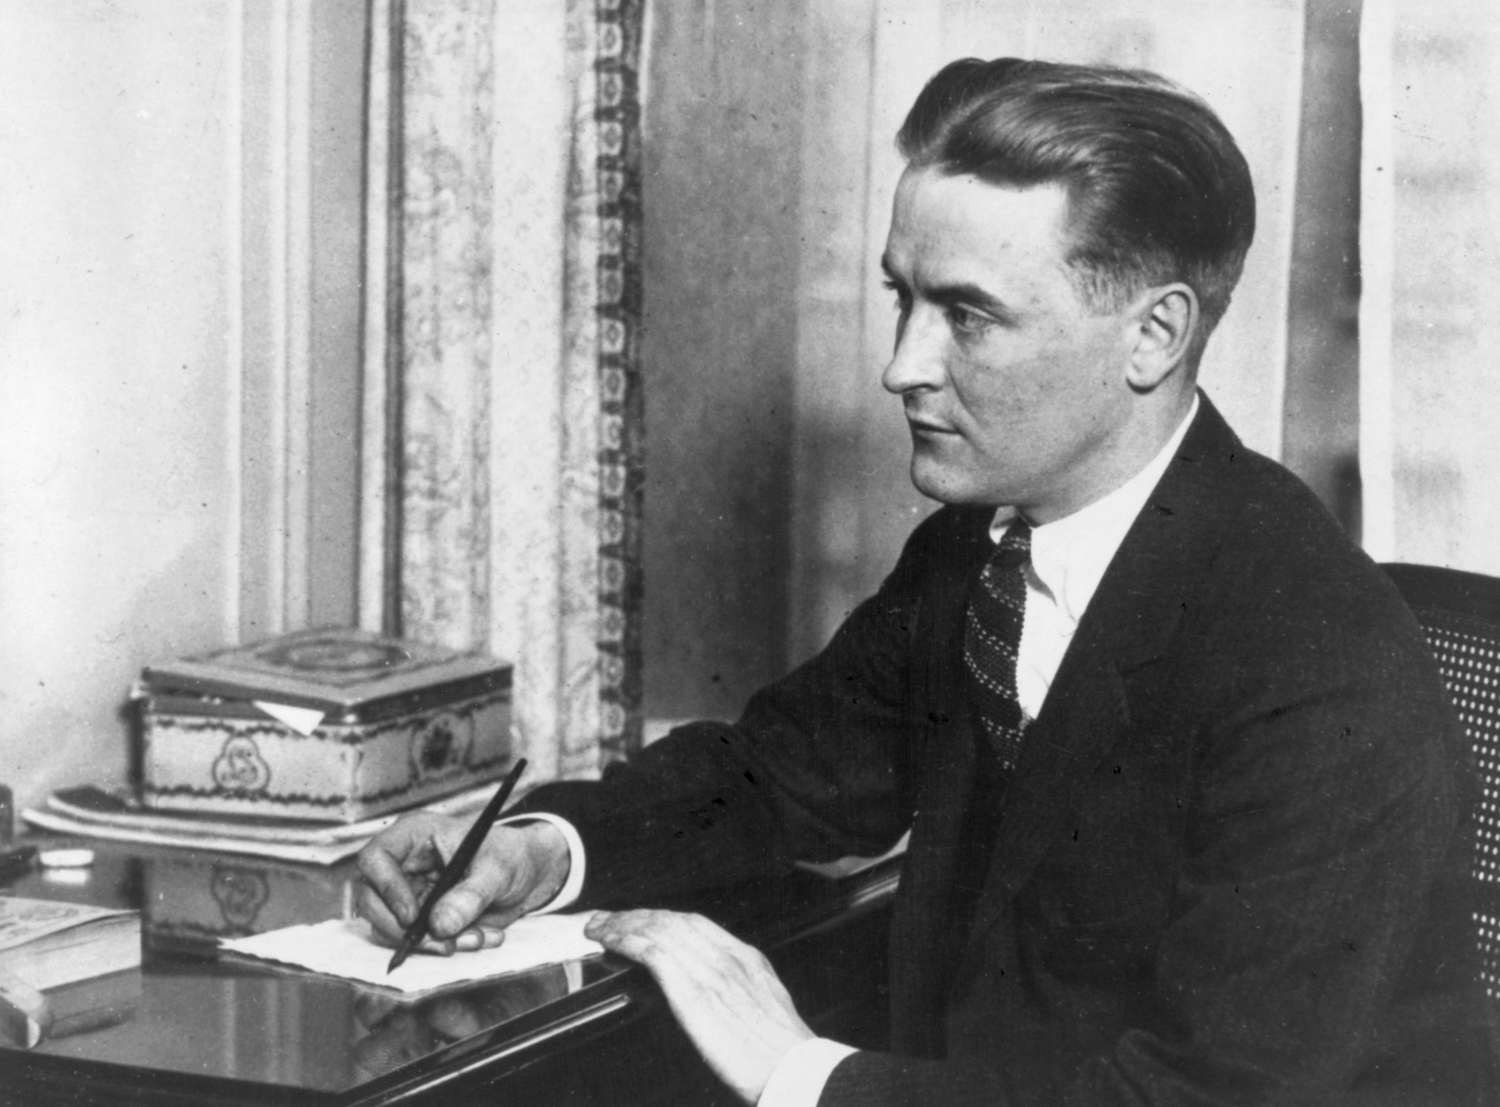 F. Scott Fitzgerald was a successful author